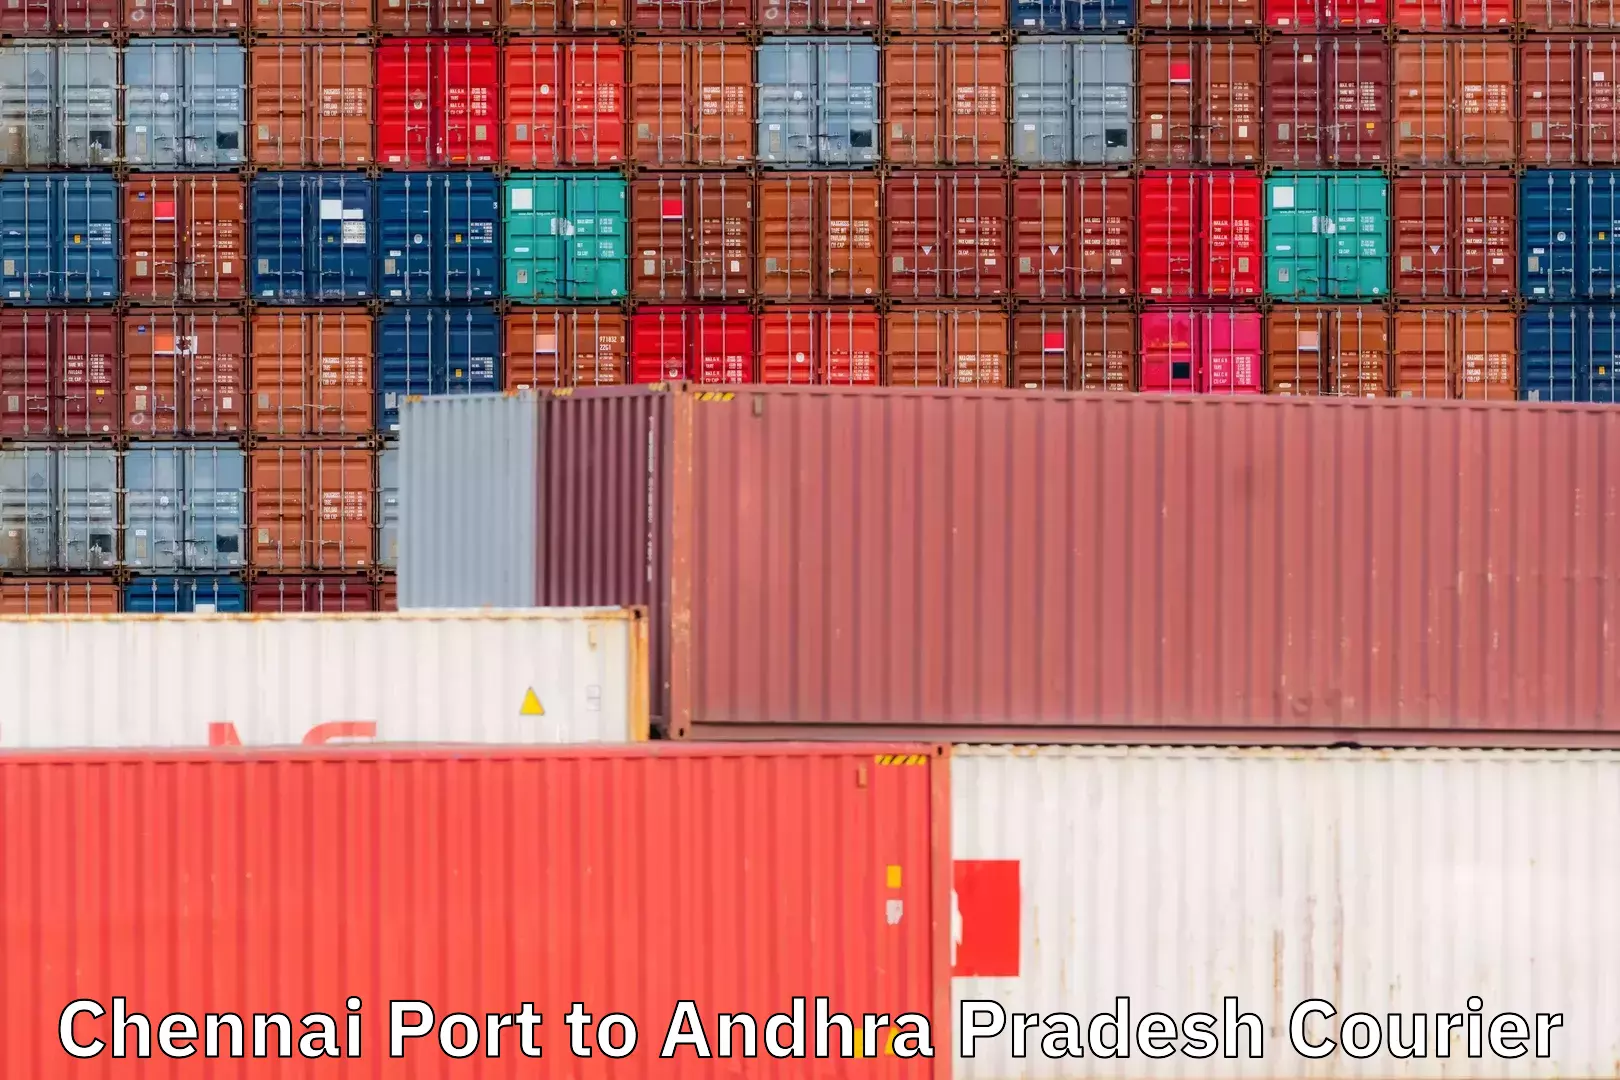 Courier service partnerships Chennai Port to Andhra Pradesh